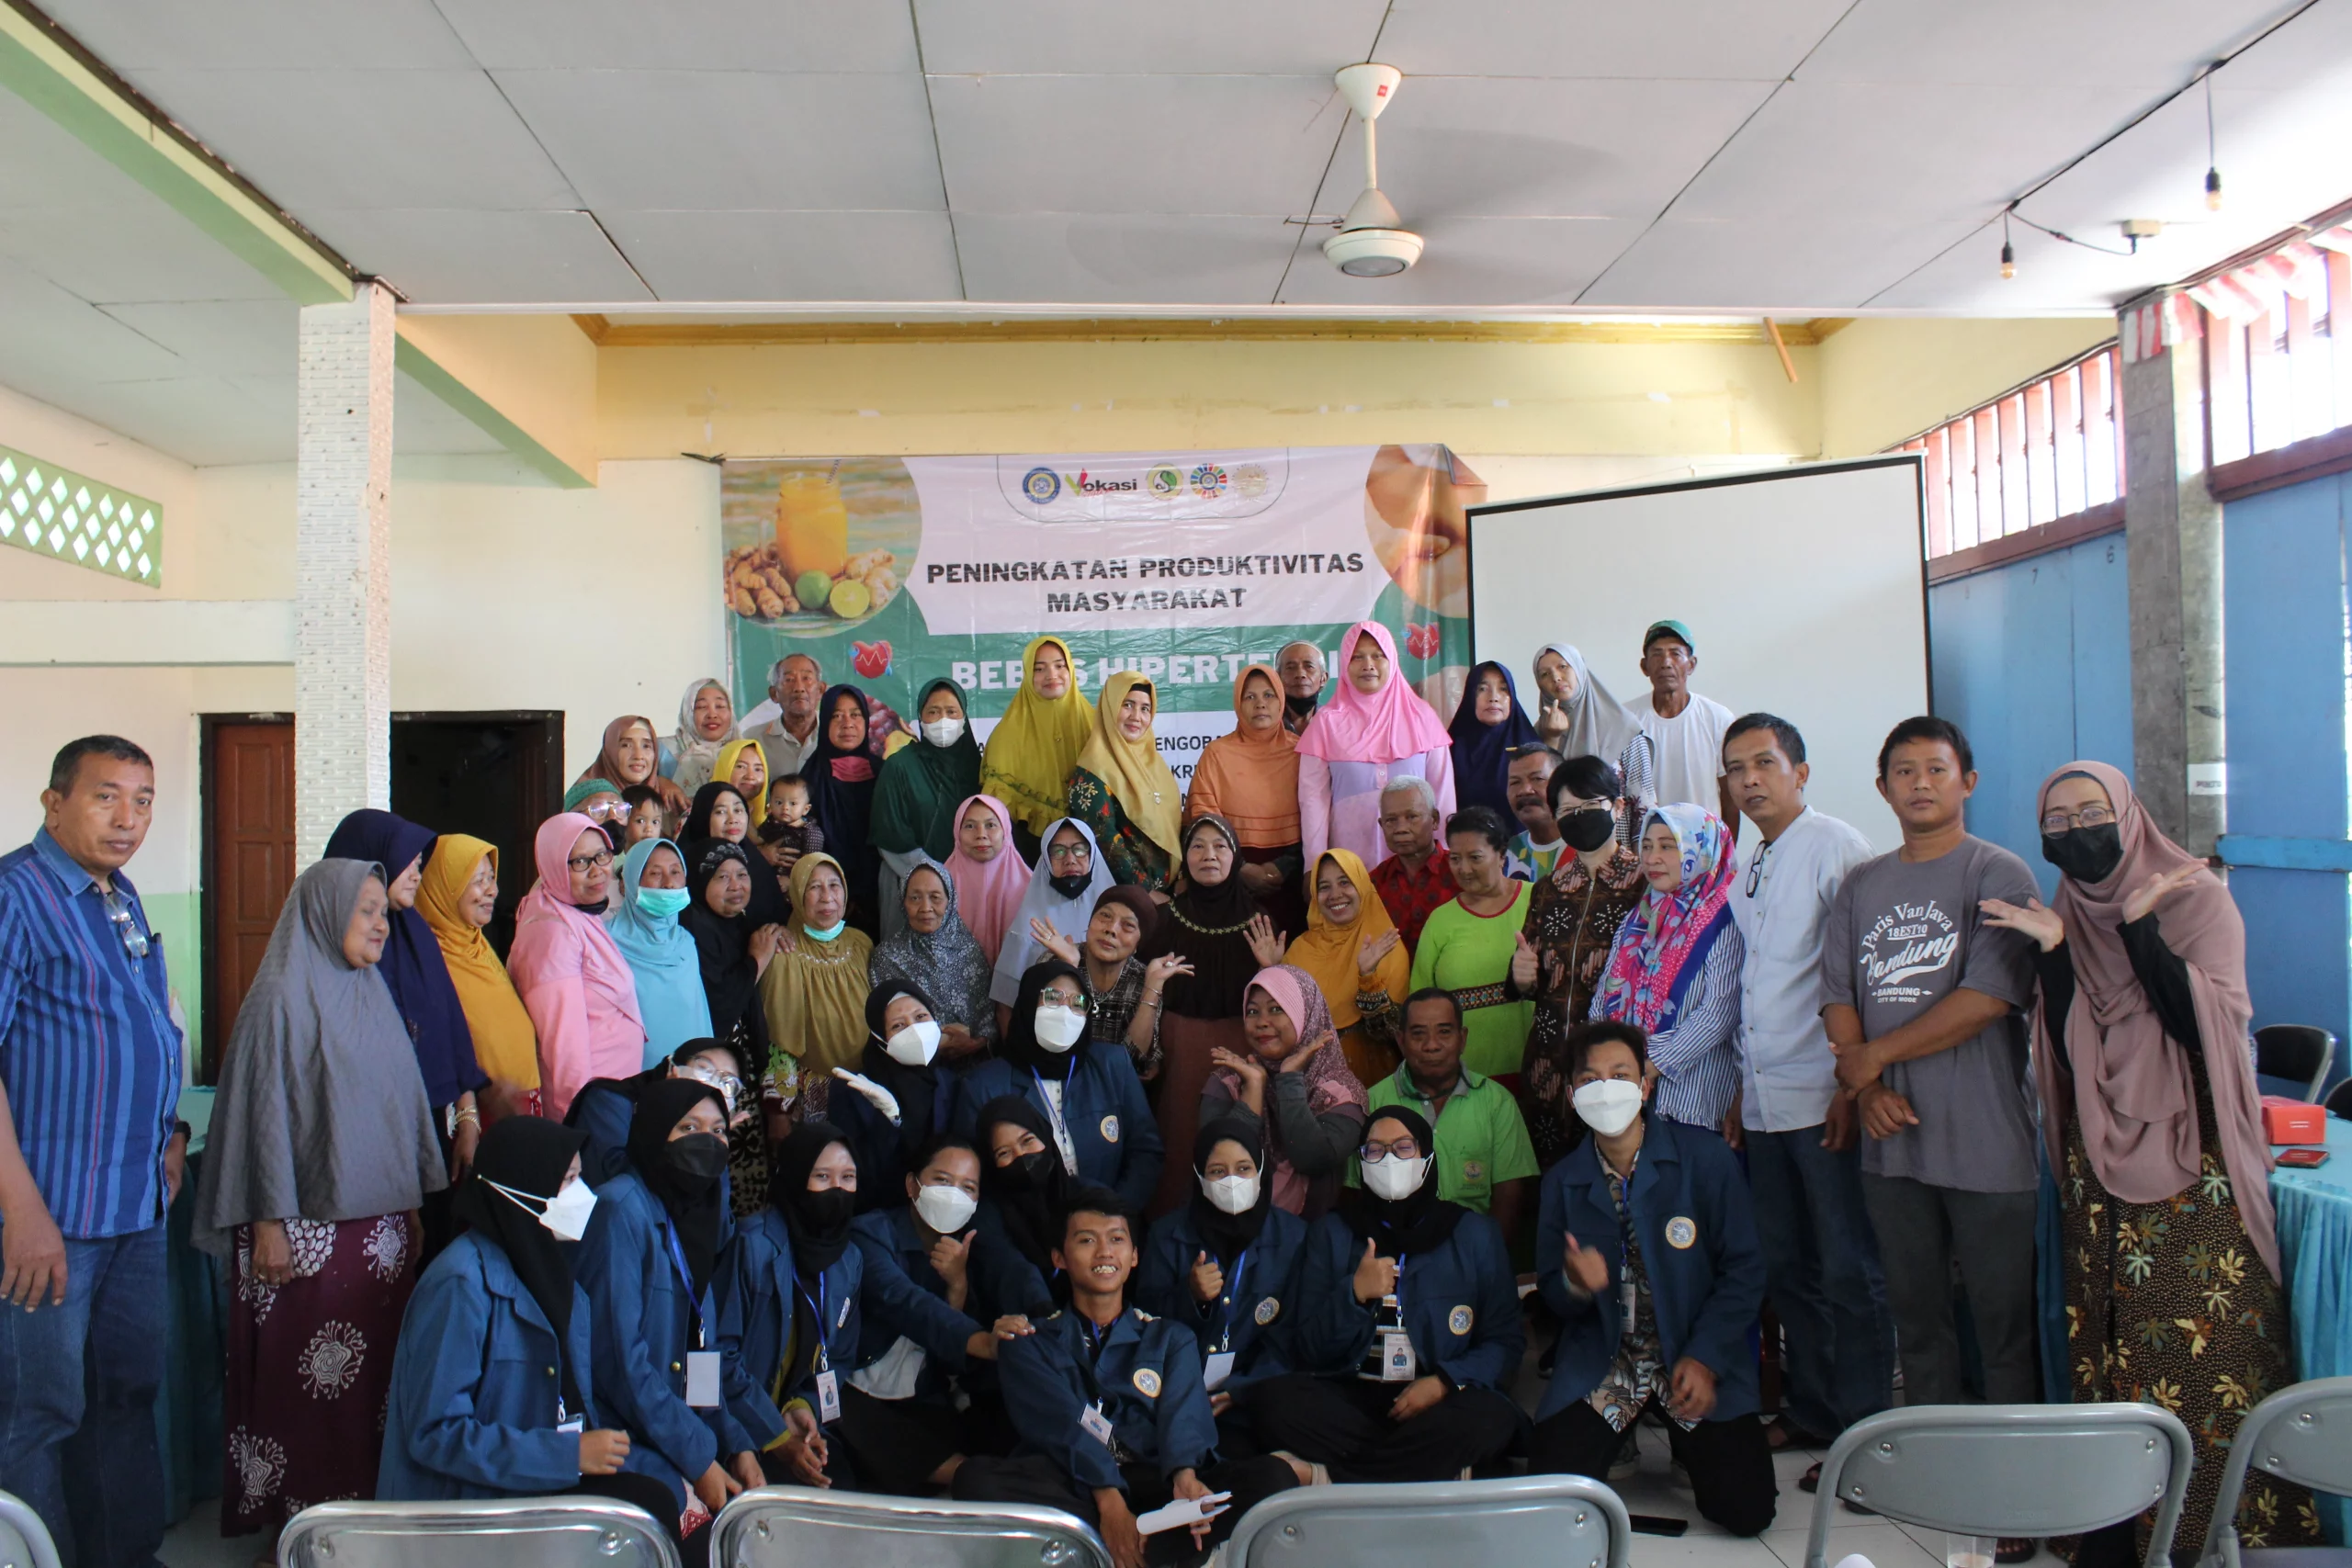 Peningkatan Produktivitas Masyarakat Bebas Hipertensi Pengobat Tradisional Melalui Pendekatan Kelurahan Morokrembangan Kecamatan Krembangan Kota Surabaya